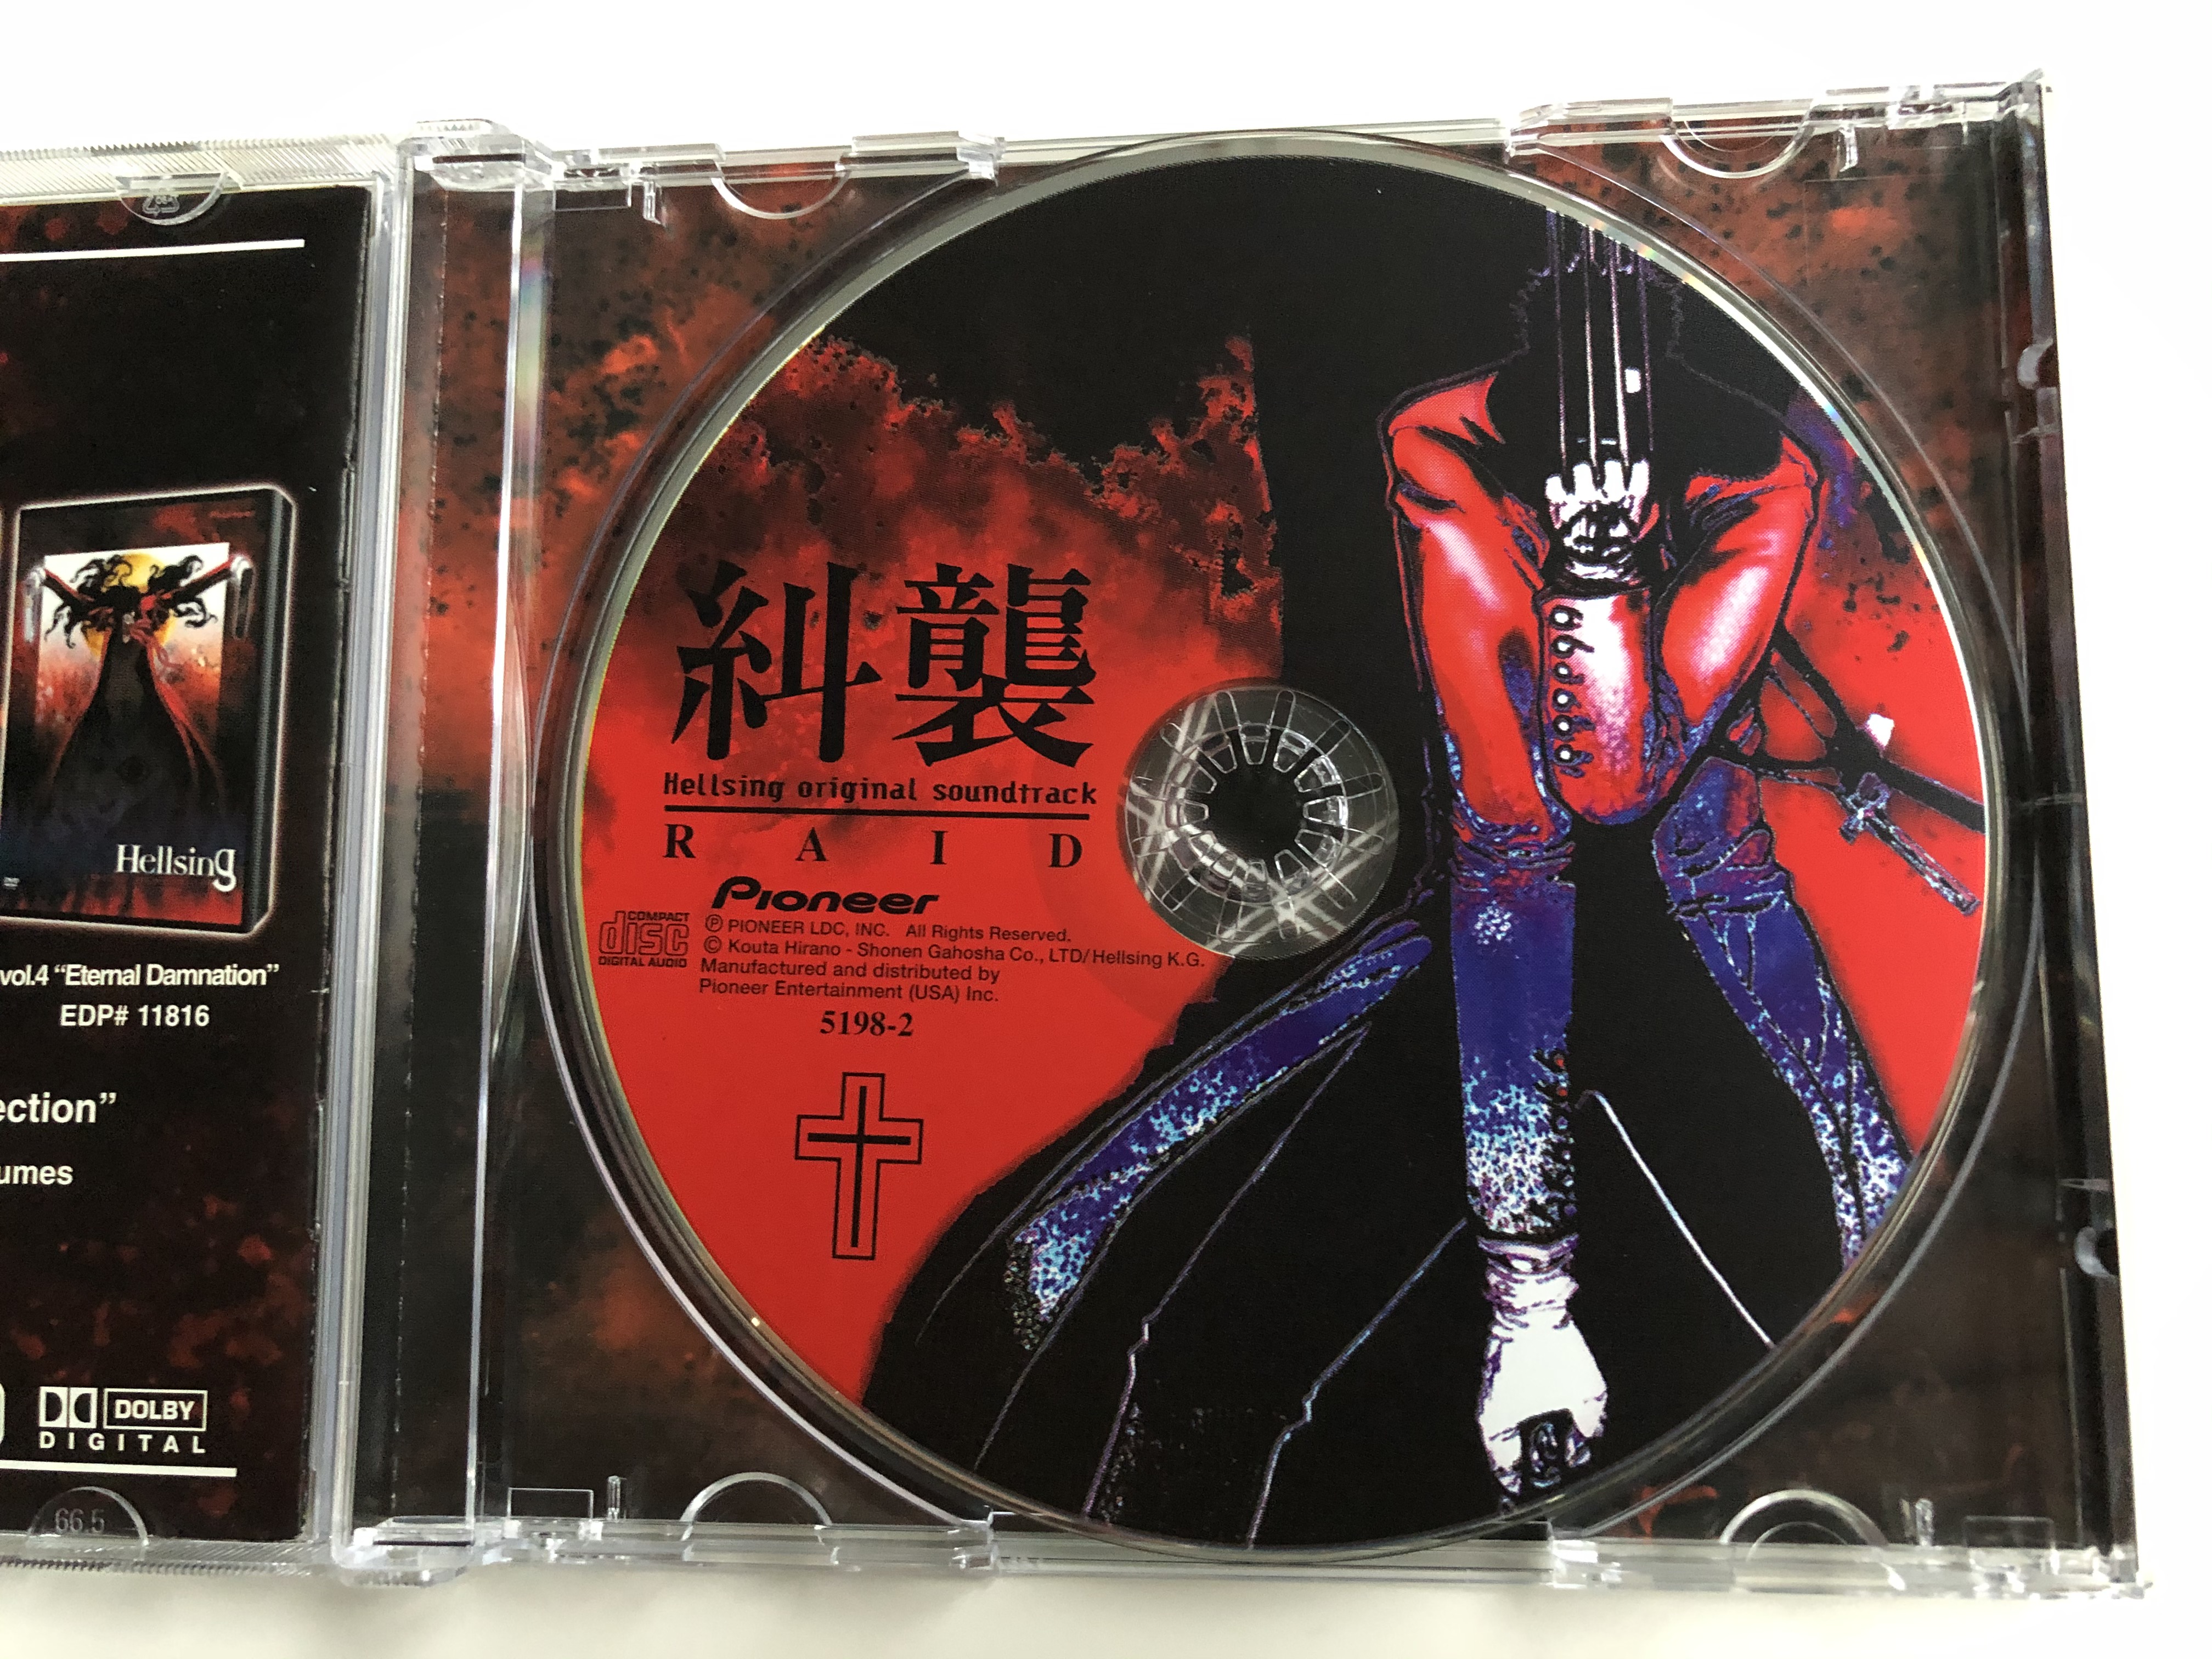 hellsing-original-soundtrack-raid-pioneer-audio-cd-5198-2-3-.jpg